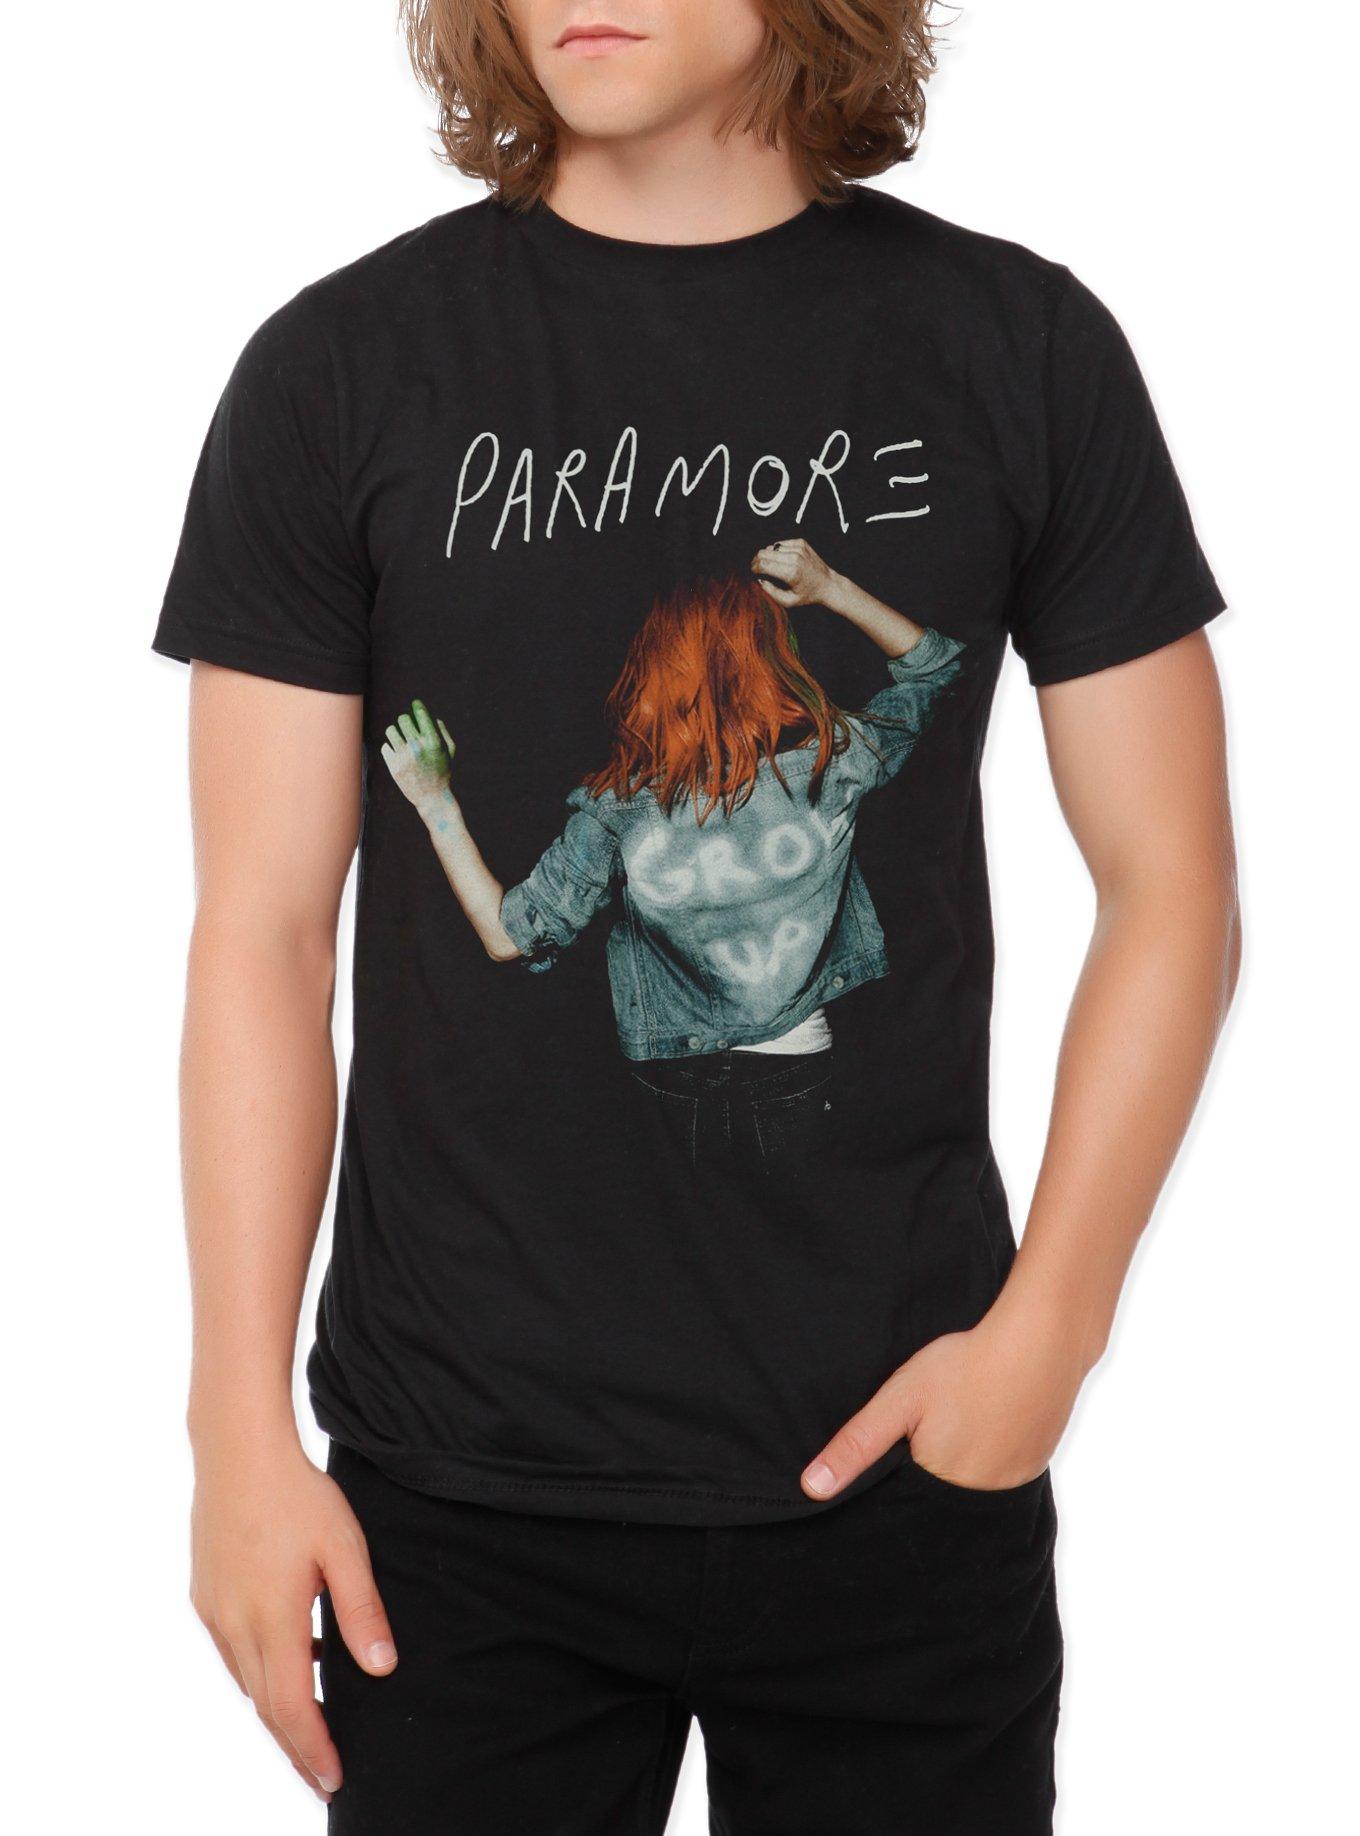 Paramore 2013 Self Titled Era Grow Up Shirt - ReproTees - The Home